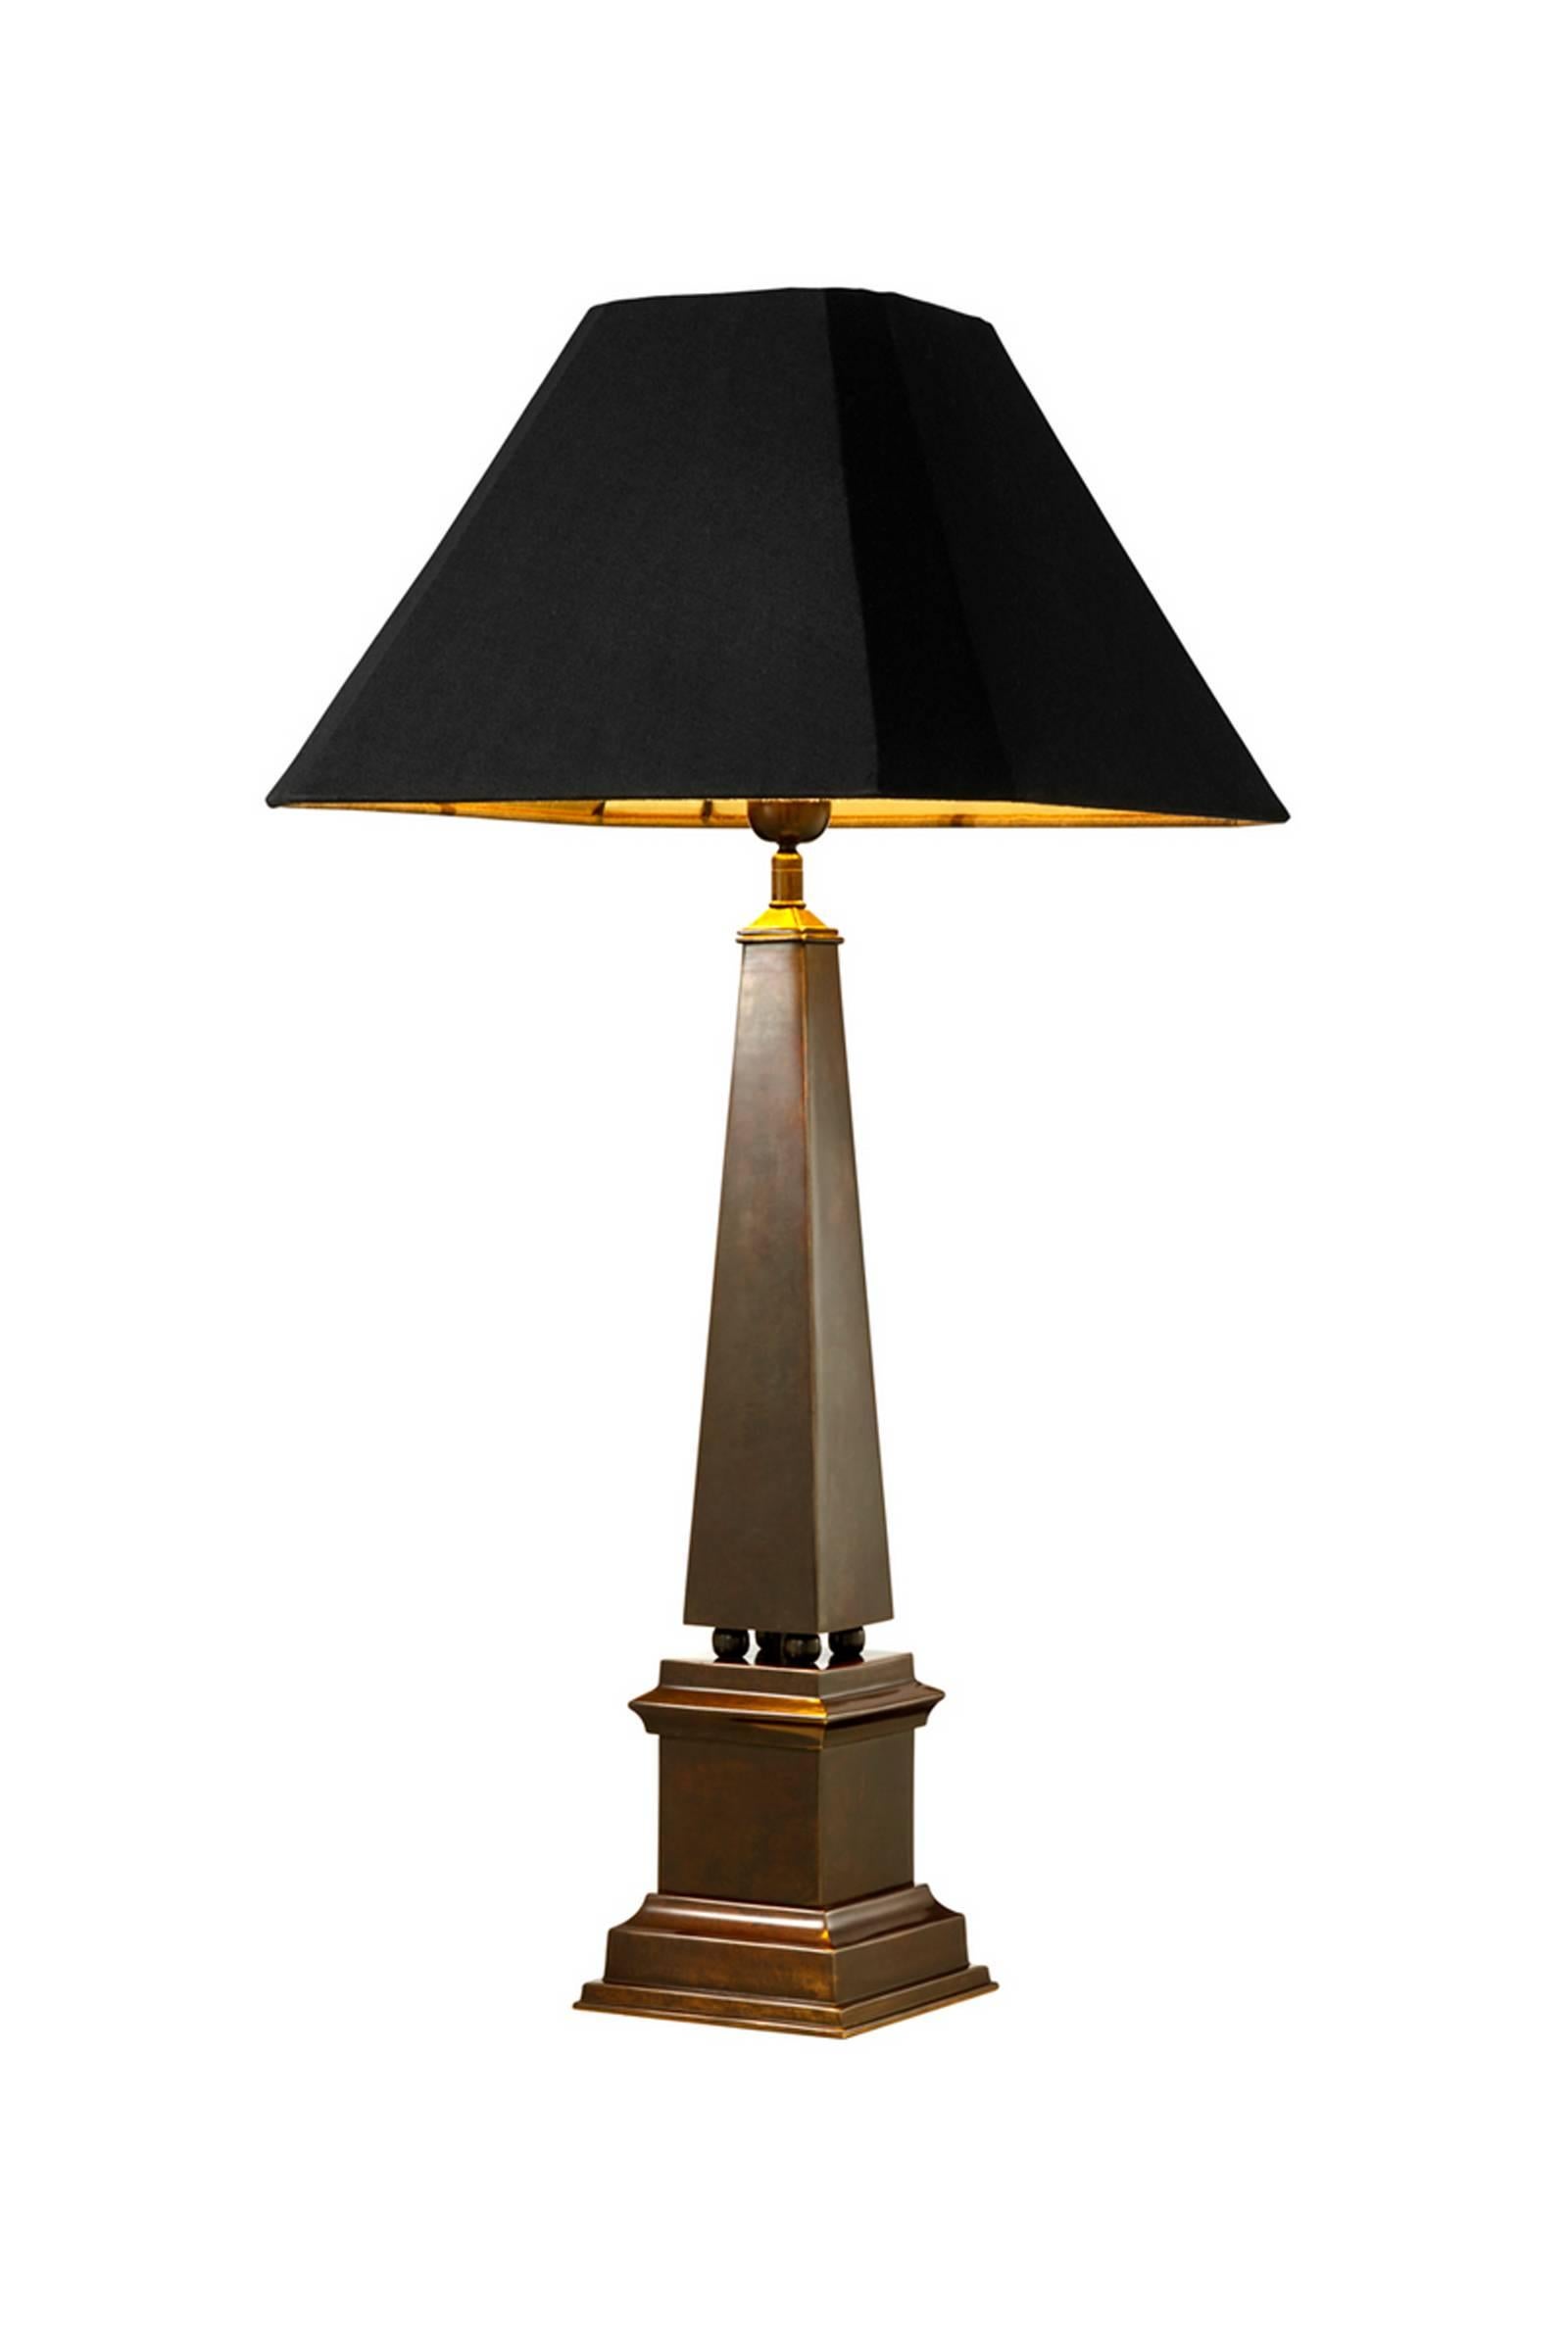 Indian Obelisk Table Lamp in Polished Brass